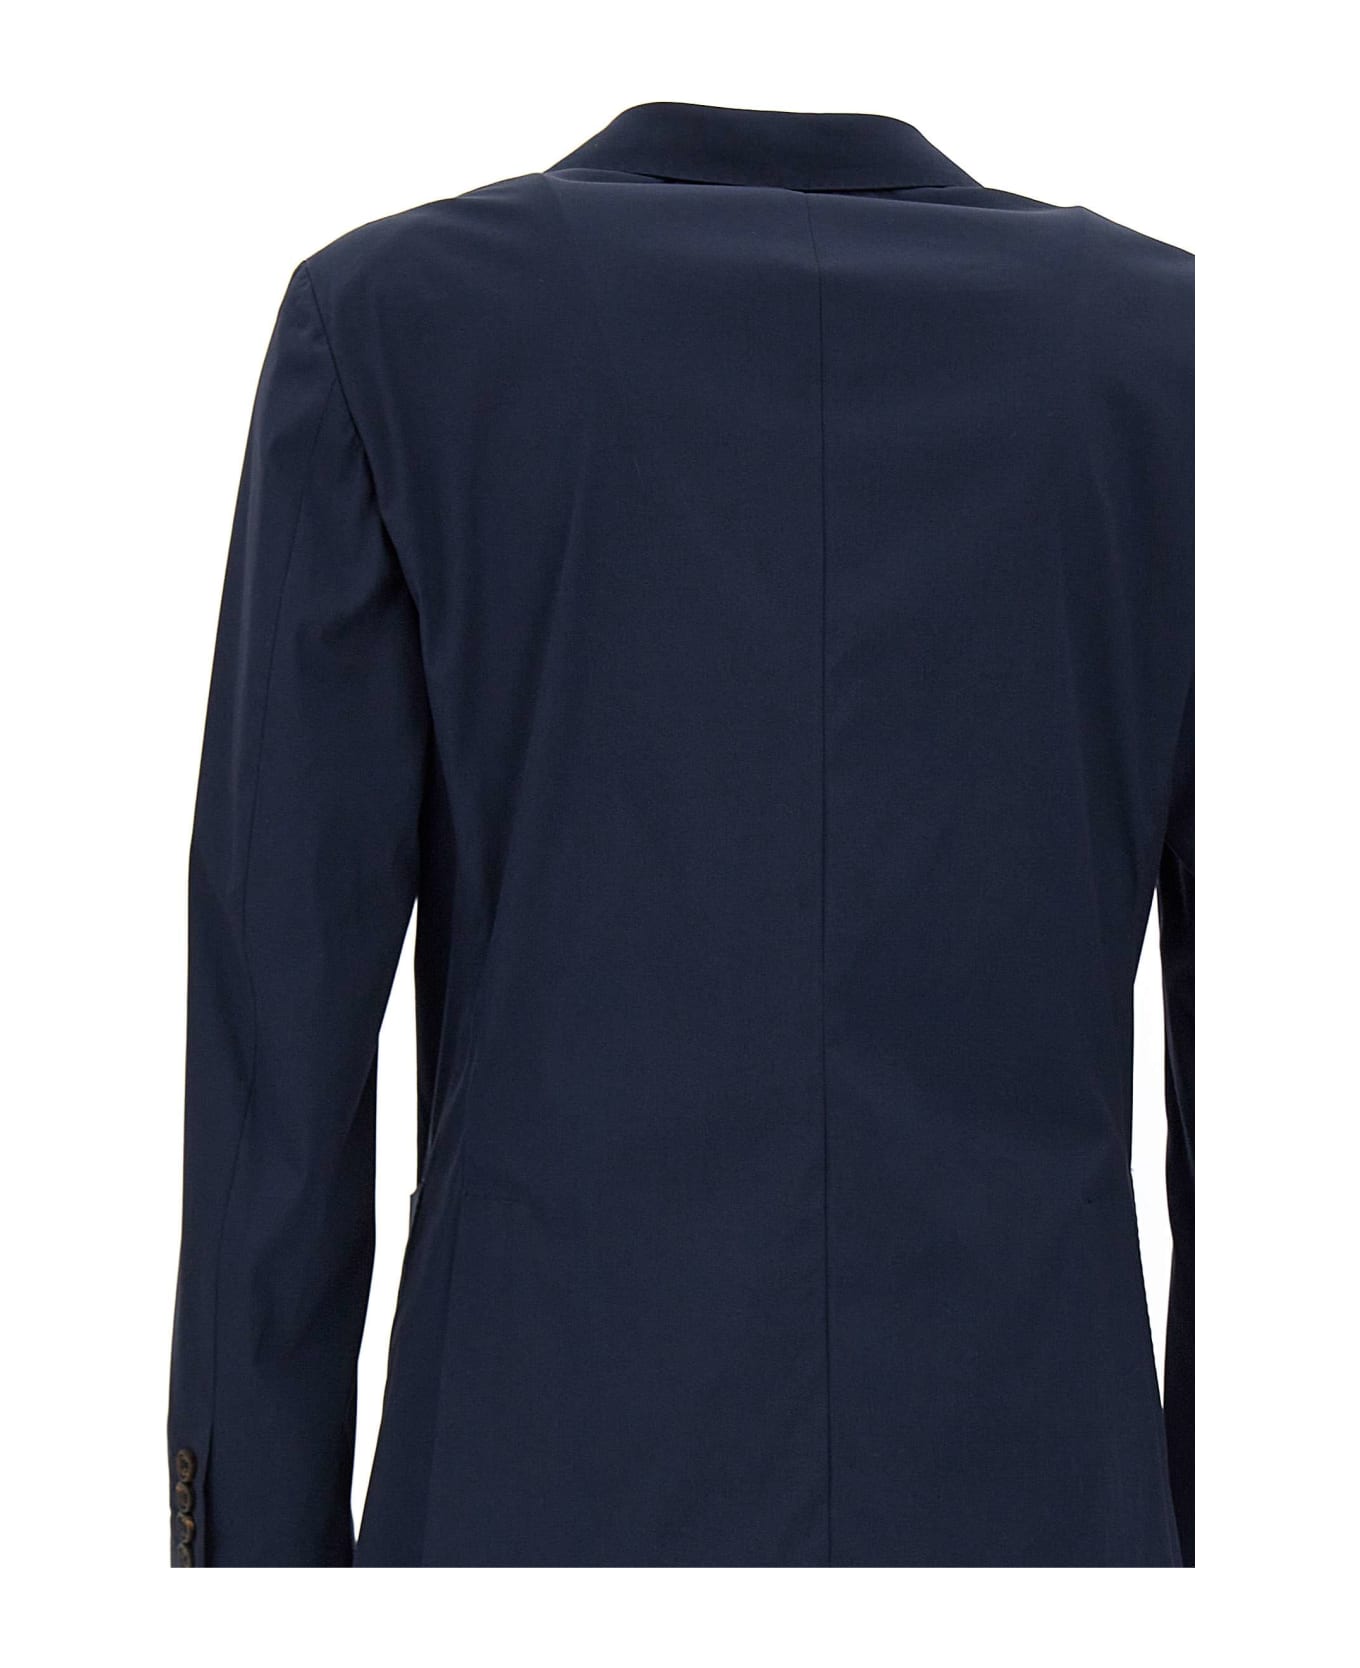 Eleventy Two-piece Suit - BLUE スーツ